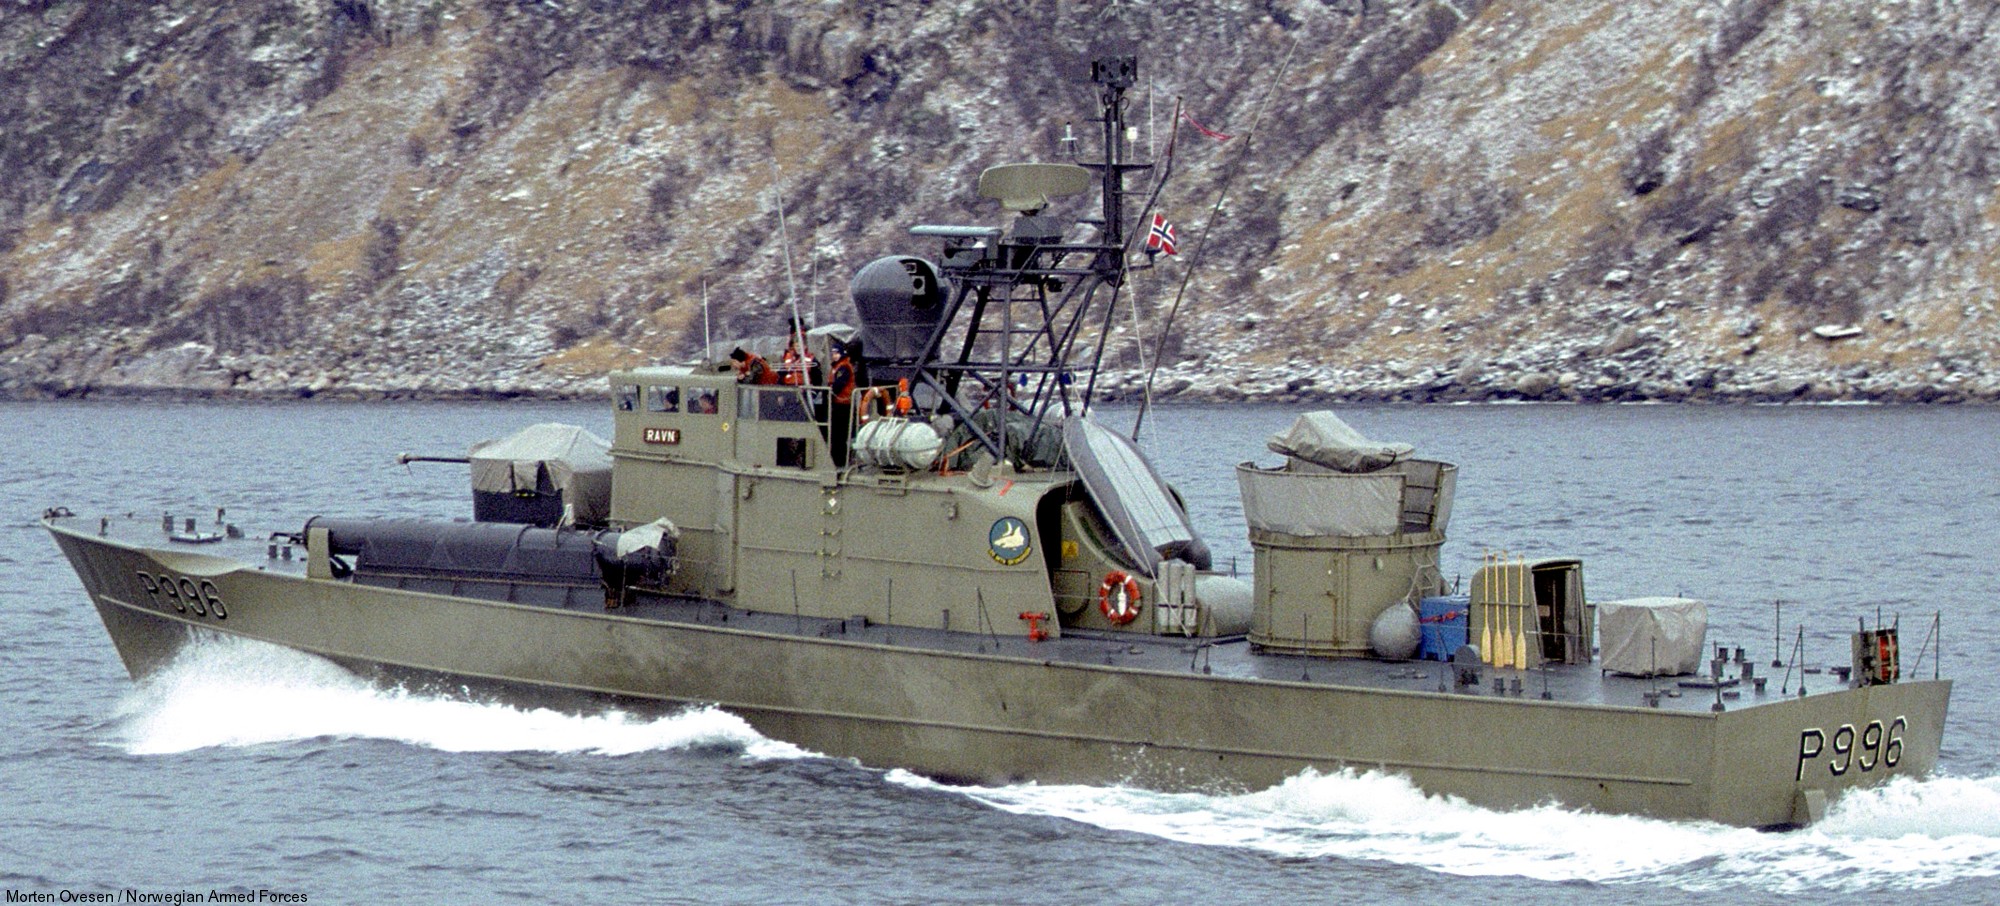 p-996 knm ravn hauk class fast attack missile torpedo craft boat norwegian navy sjøforsvaret 05